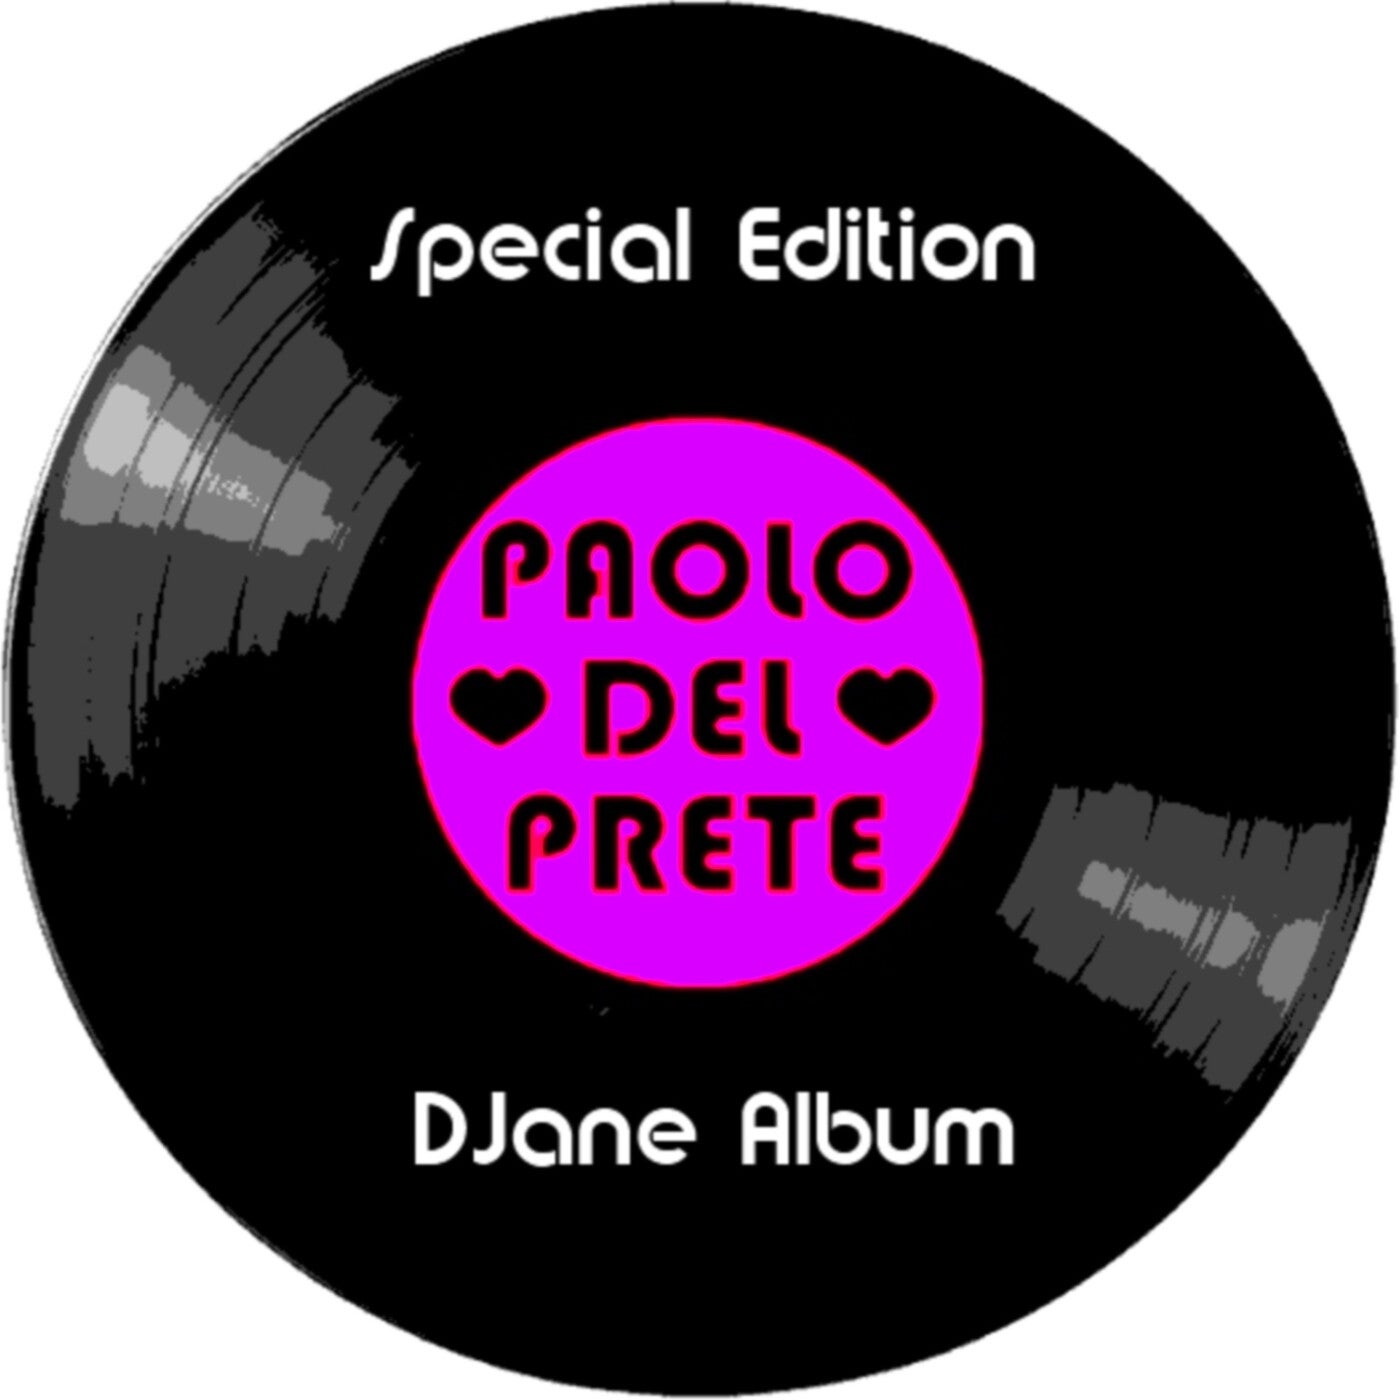 Djane Album (Special Edition)